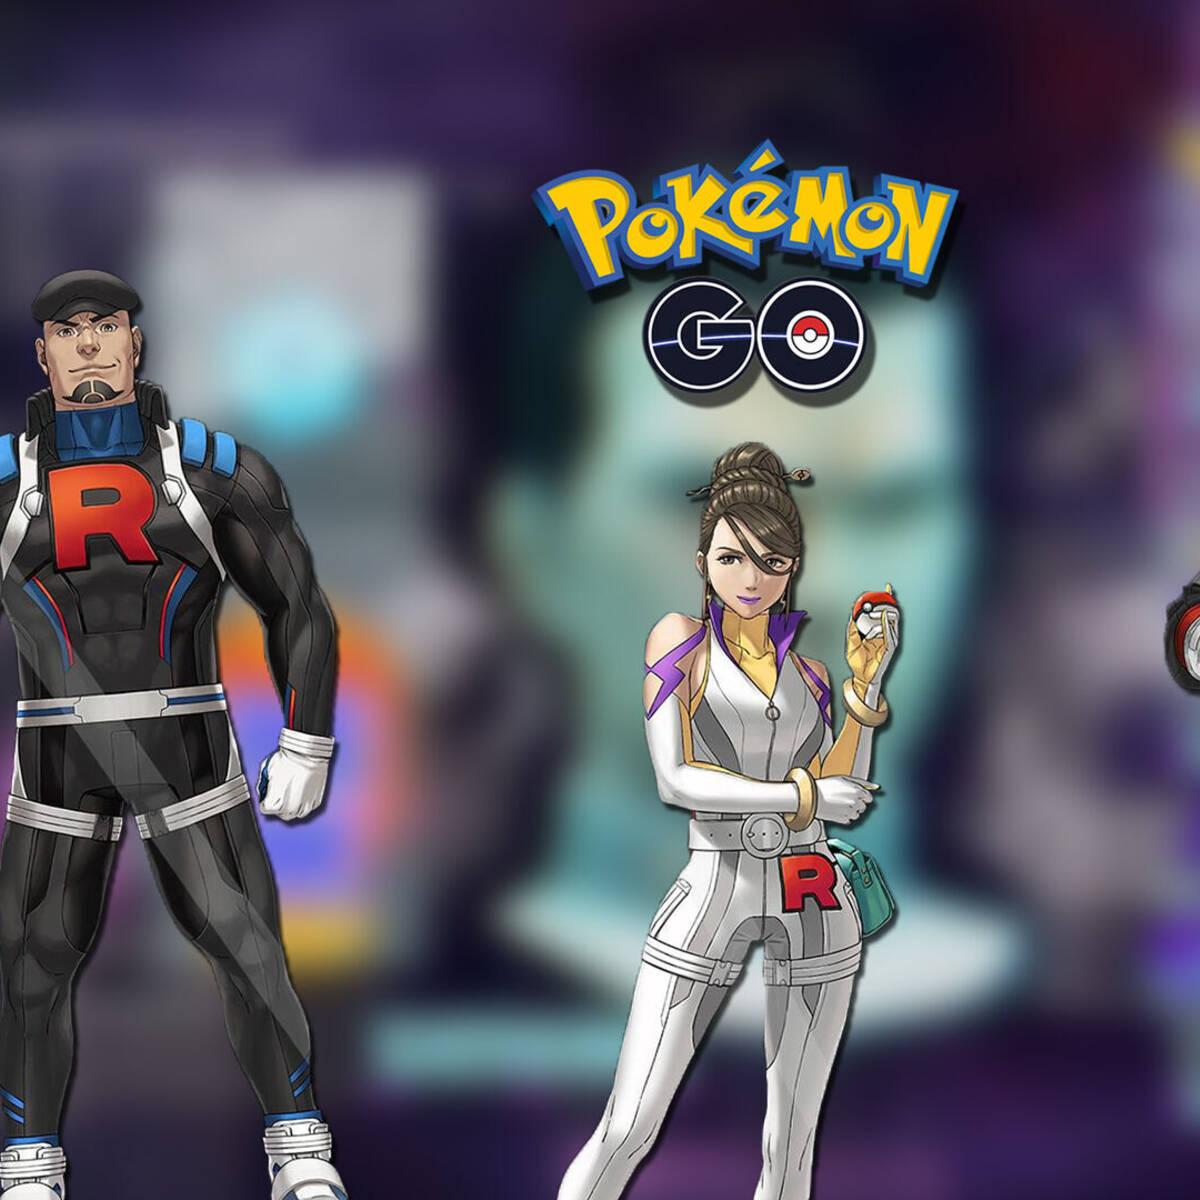 Pokémon GO: truco para ganar fácilmente a Arlo, Cliff, Sierra y